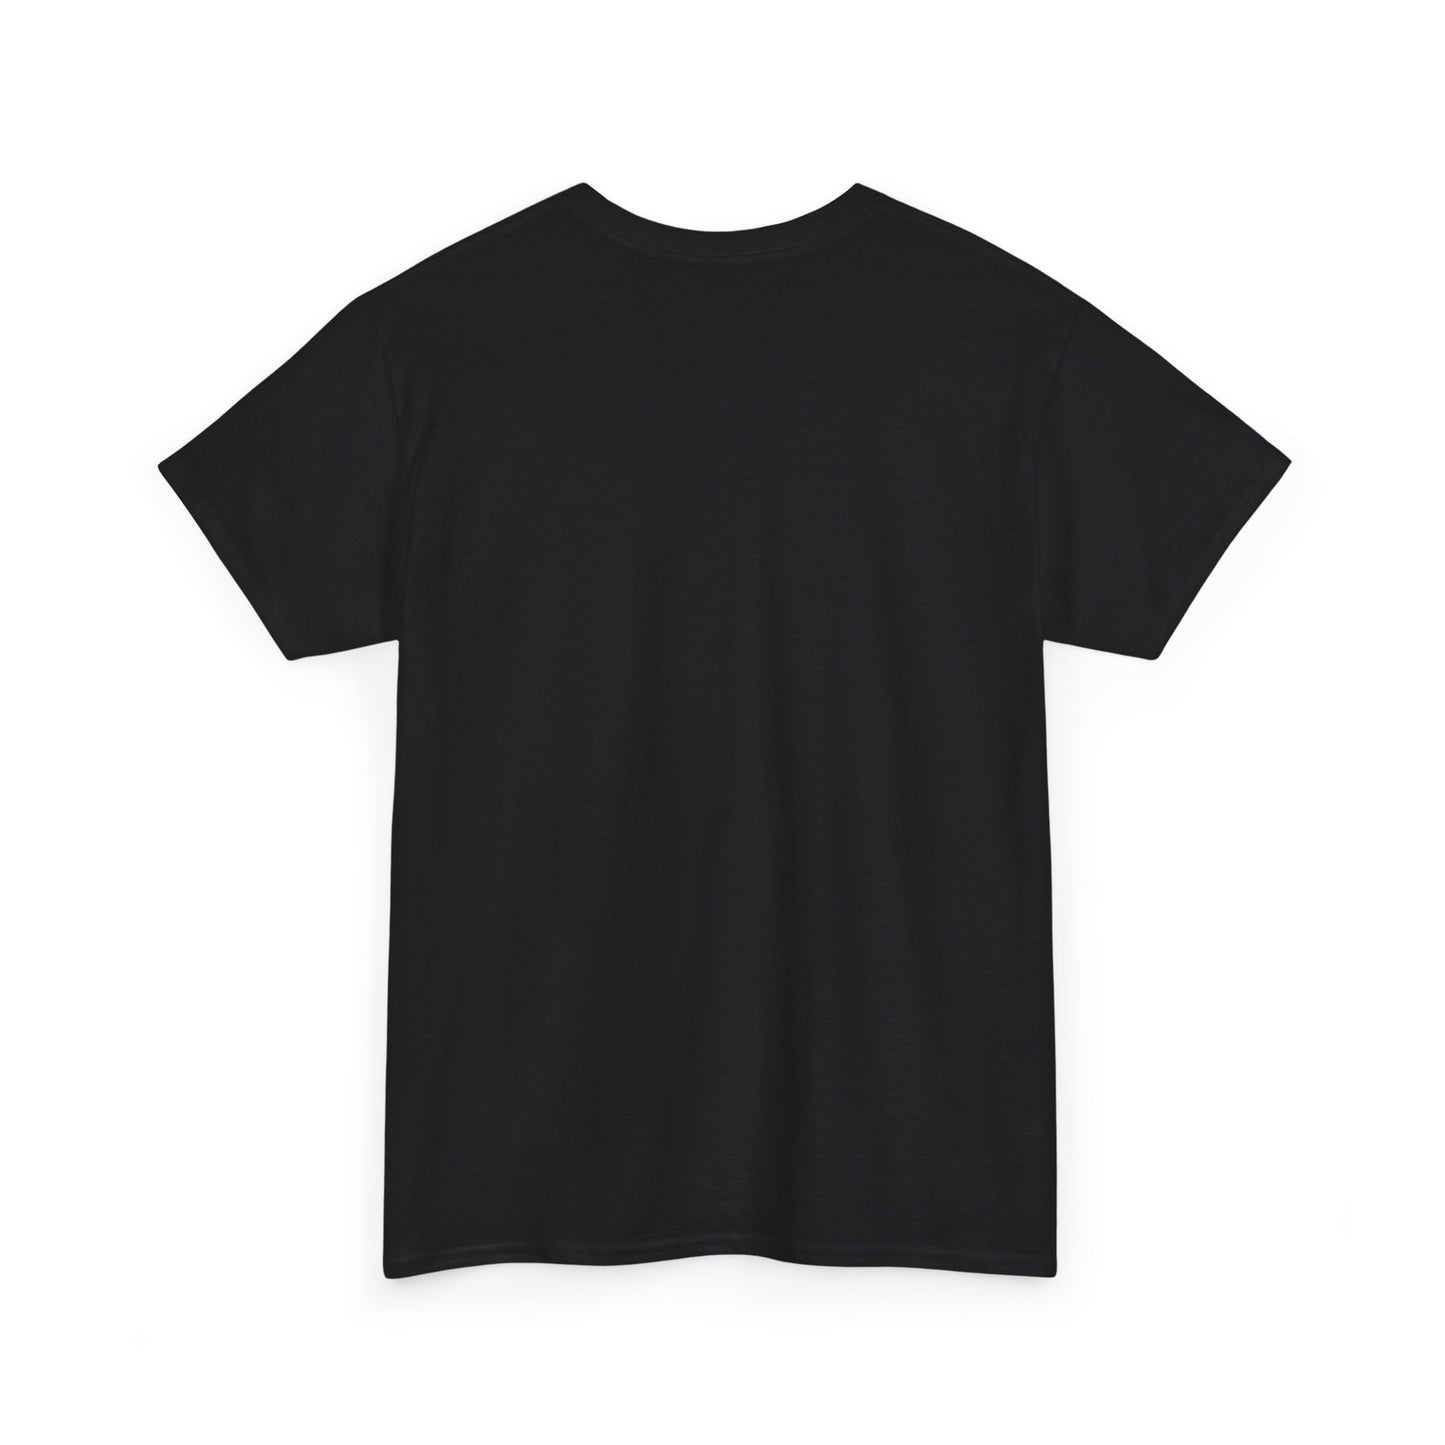 Spartan T-Shirt, Gaming Tee 100% Cotton, 4 Colours, AUS - USA warehouse, free post.